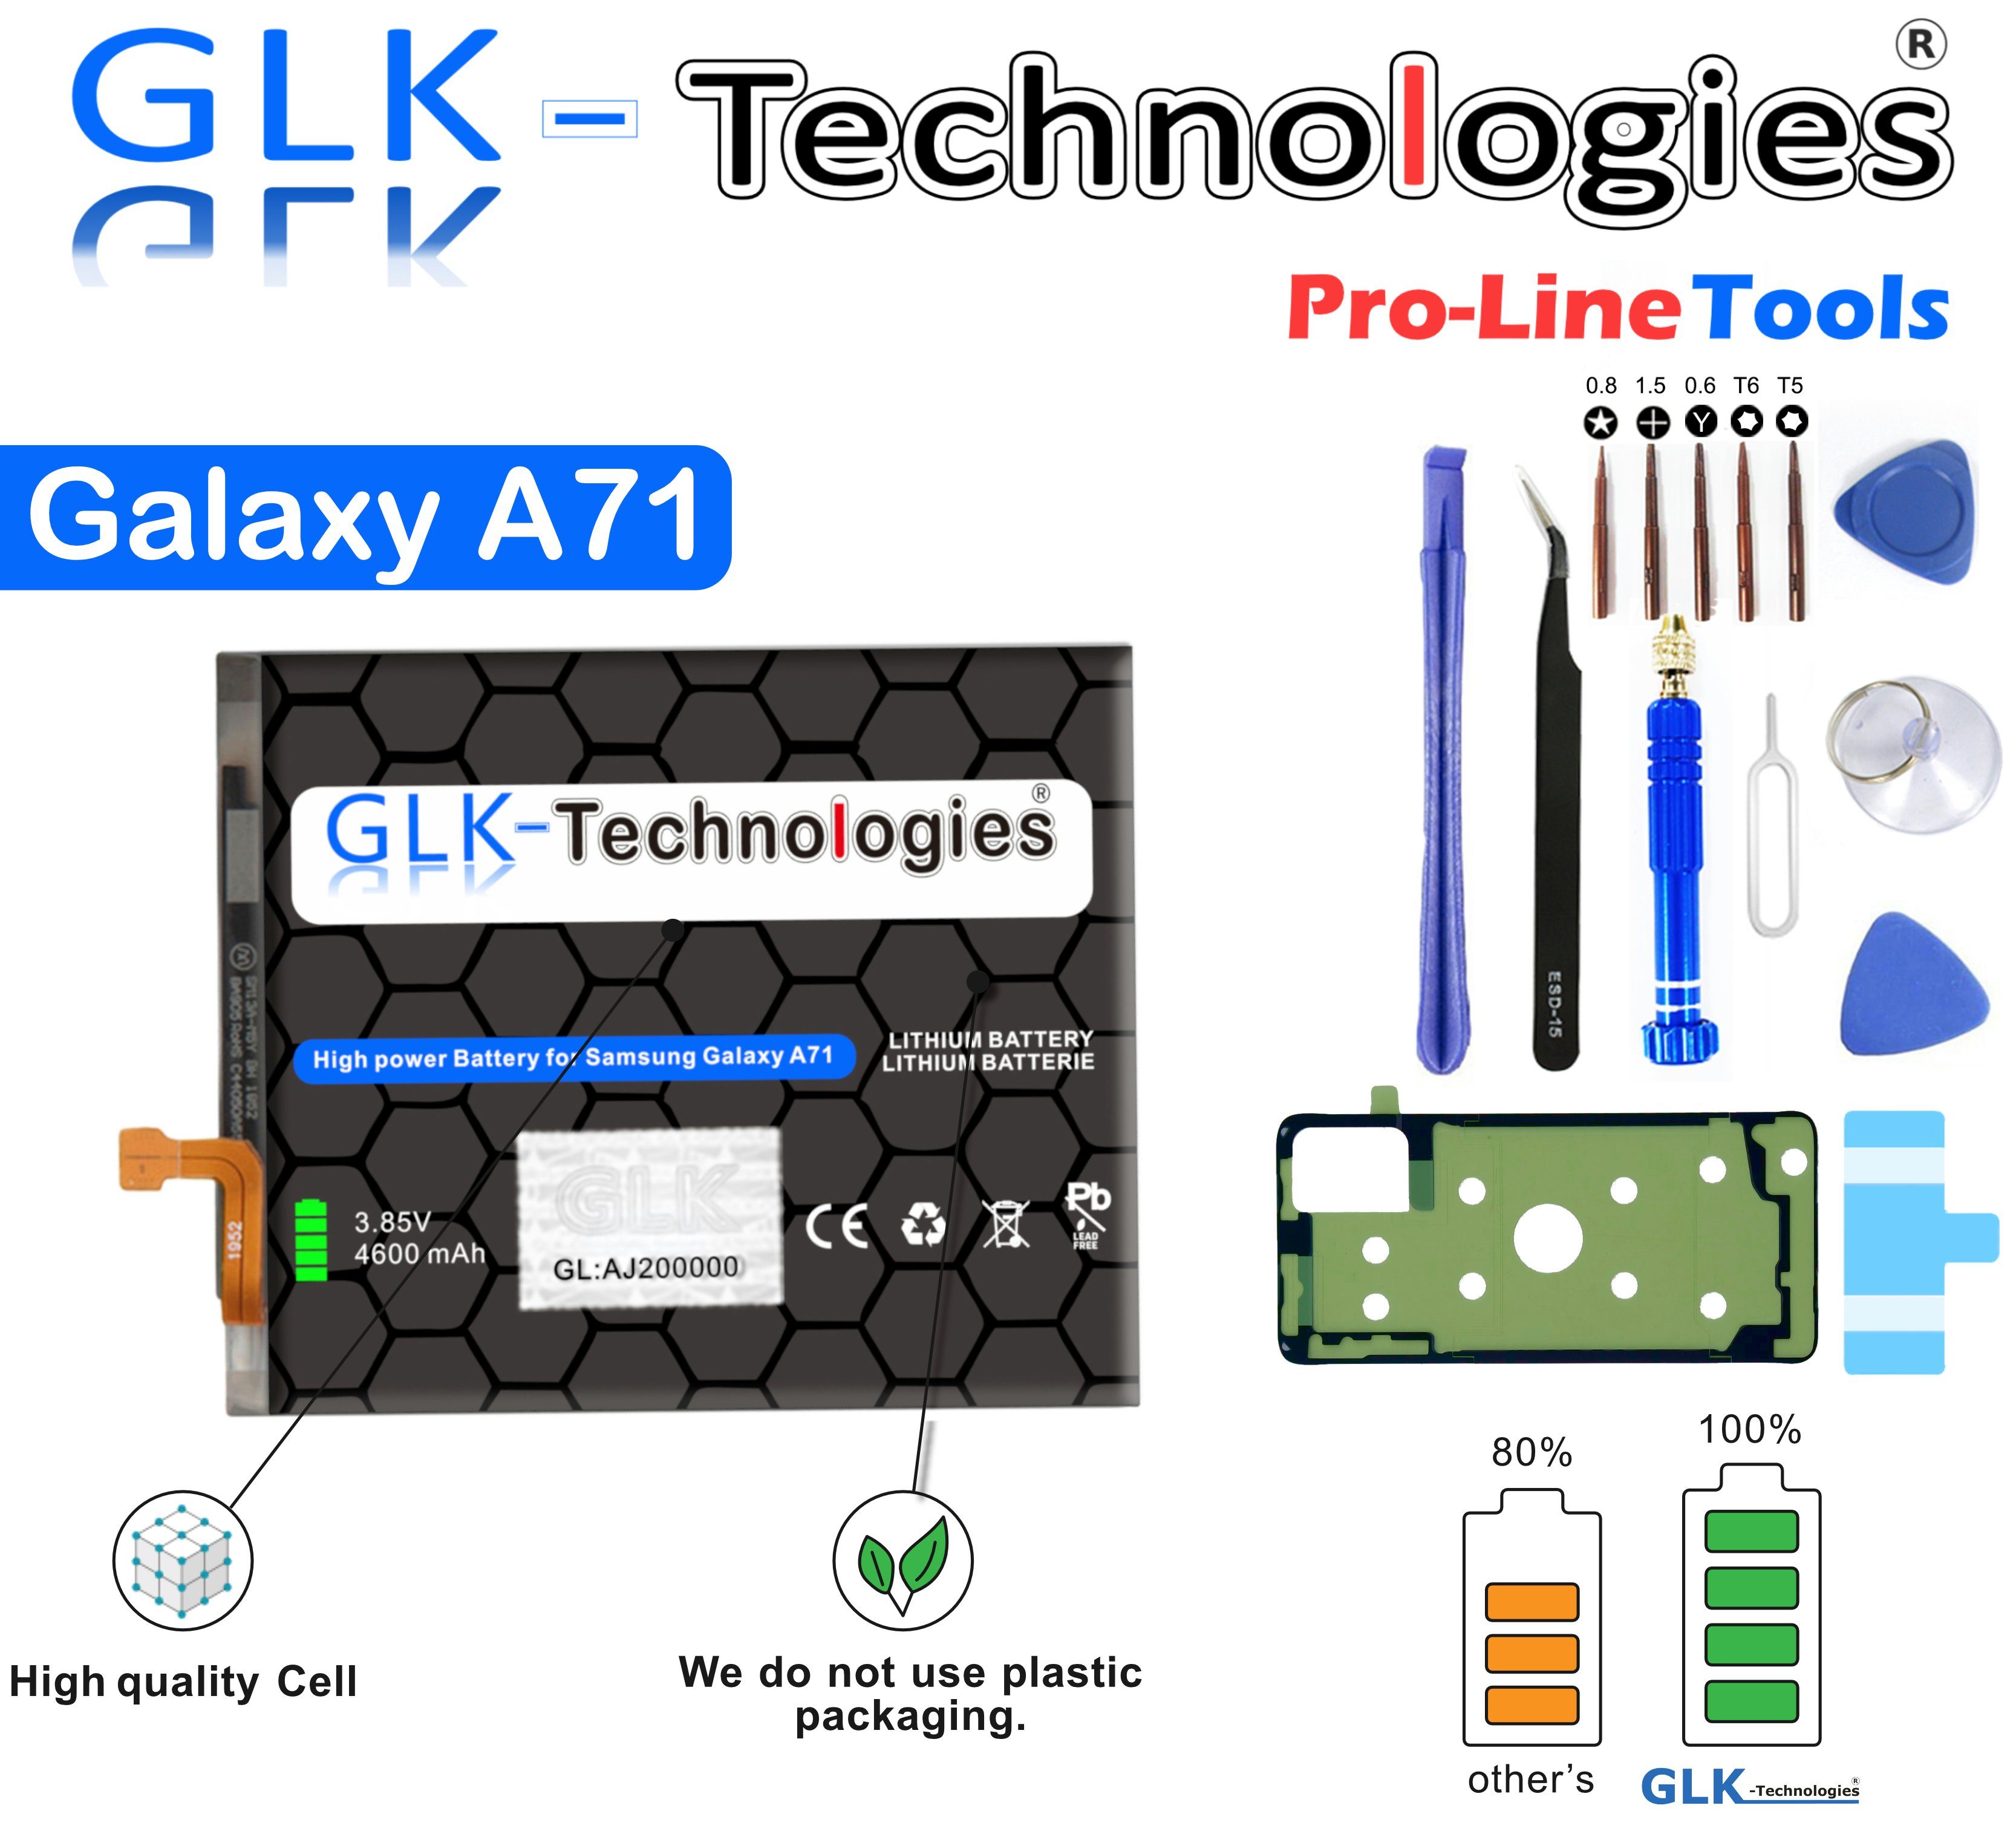 GLK-Technologies High Power Ersatzakku kompatibel mit Original Akku für Samsung Galaxy A71 SM-A715F, Profi-Set, EB-BA715ABY Batterie GLK-Technologies inkl. Werkzeug Set Kit Handy-Akku 4600 mAh (3.85 V)